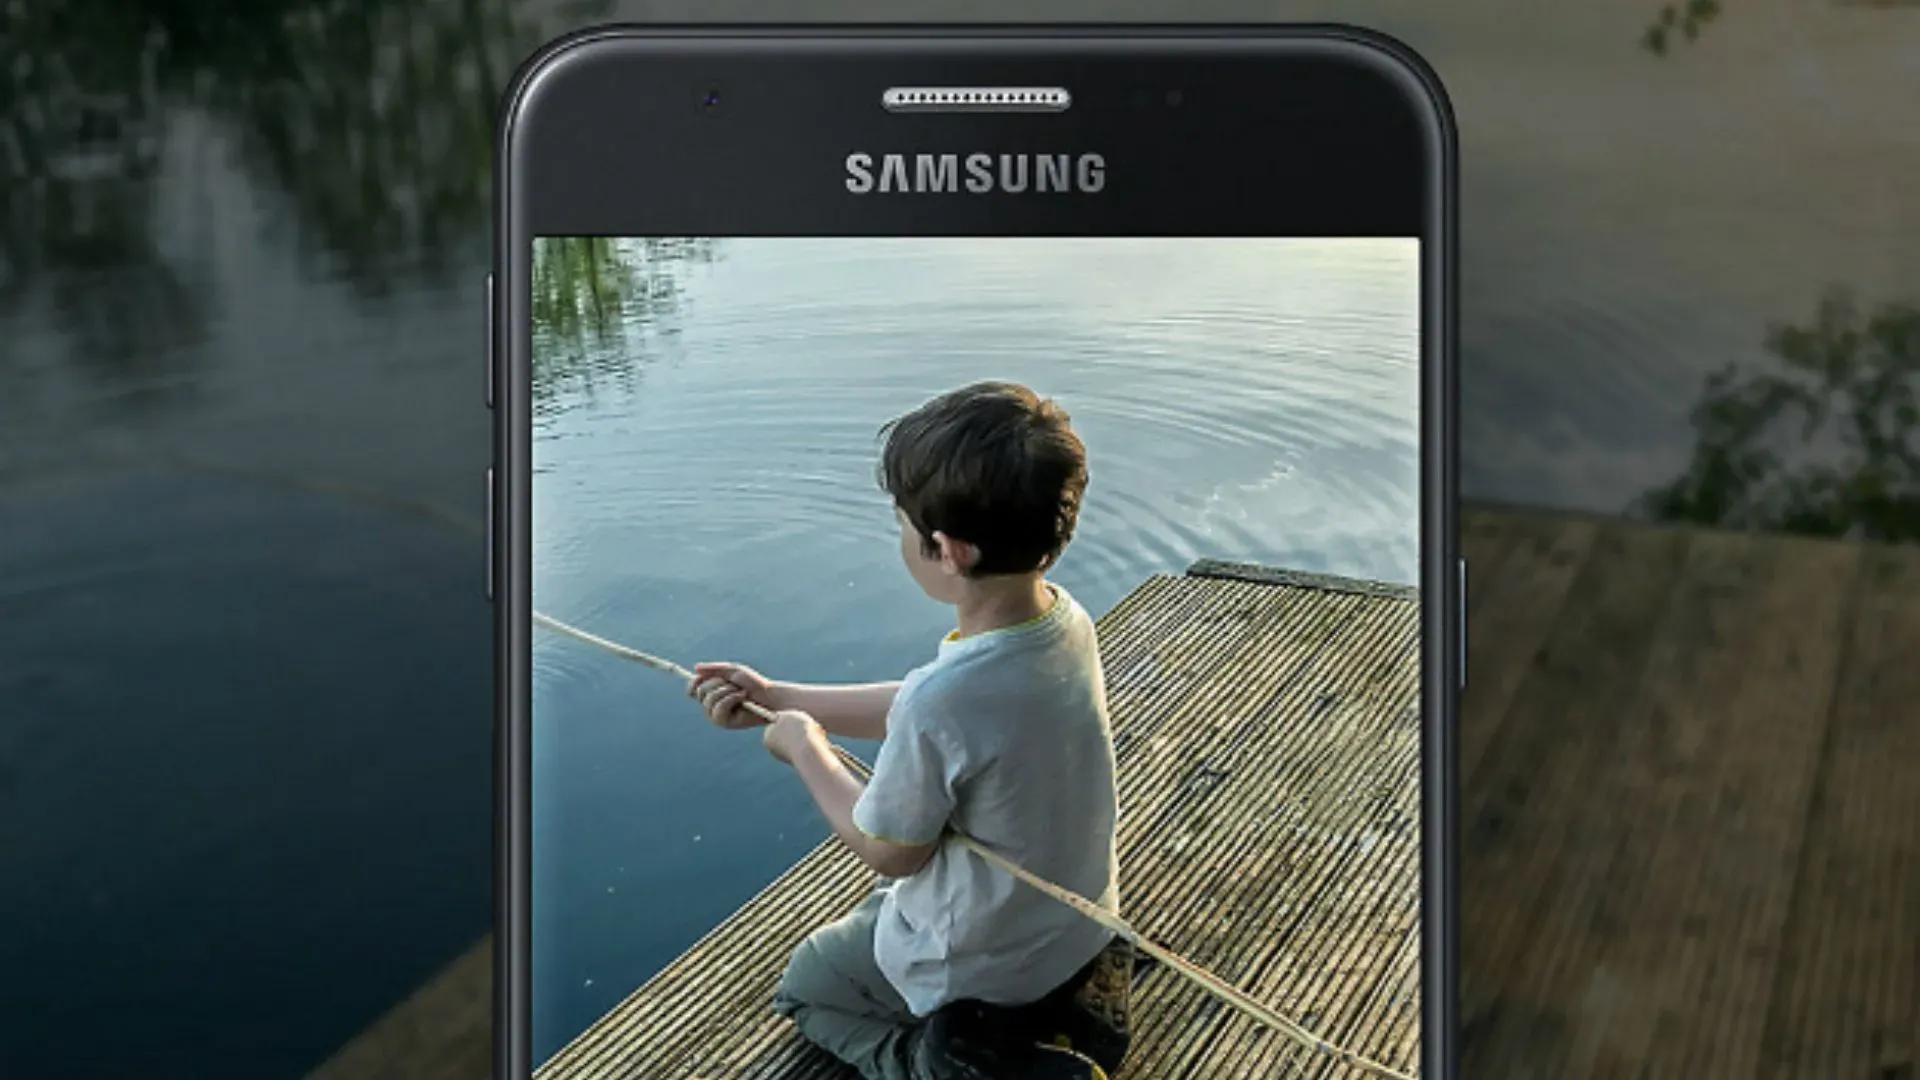 Smartphone Samsung Galaxy J5 Duos Dourado 5 4G 13MP QuadCore 16GB com  Flash Frontal - Samsung Galaxy - Magazine Luiza